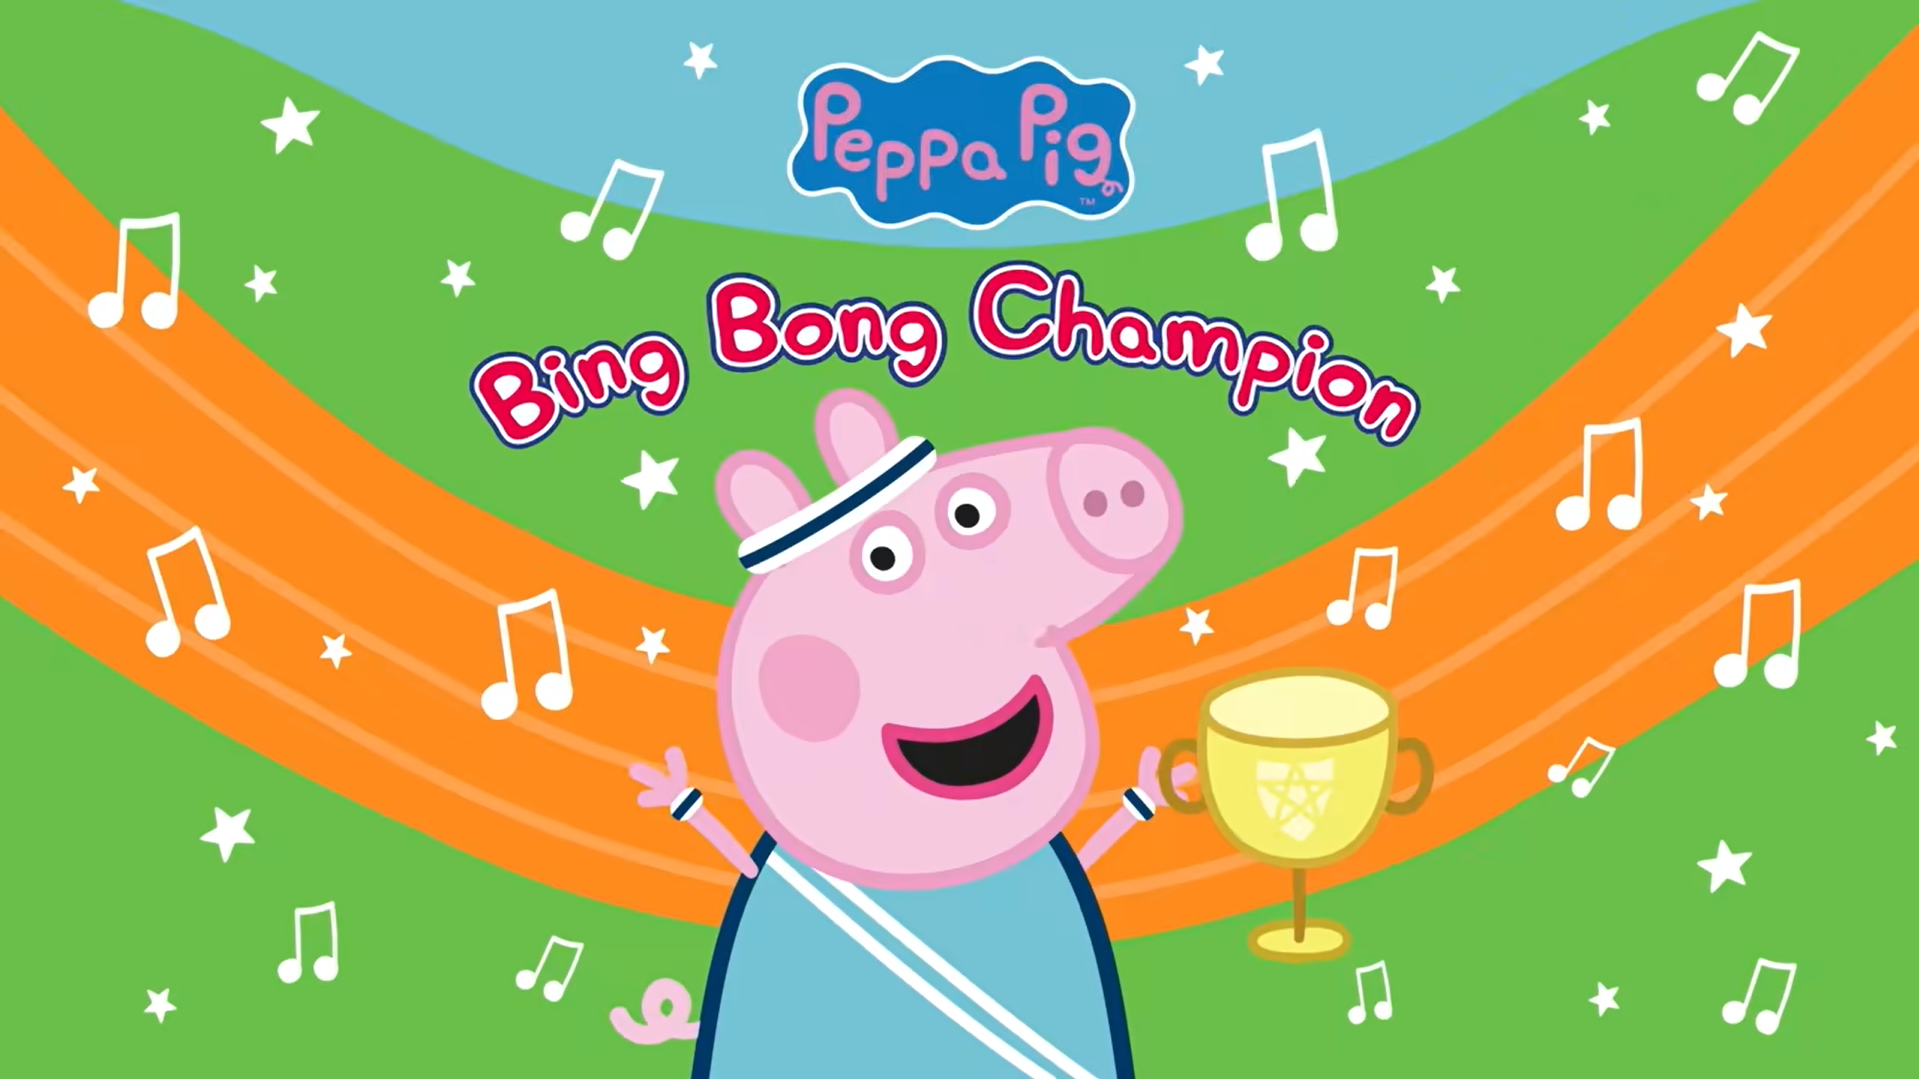 Bing Bong Champion: Peppa Pig song's complete lyrics